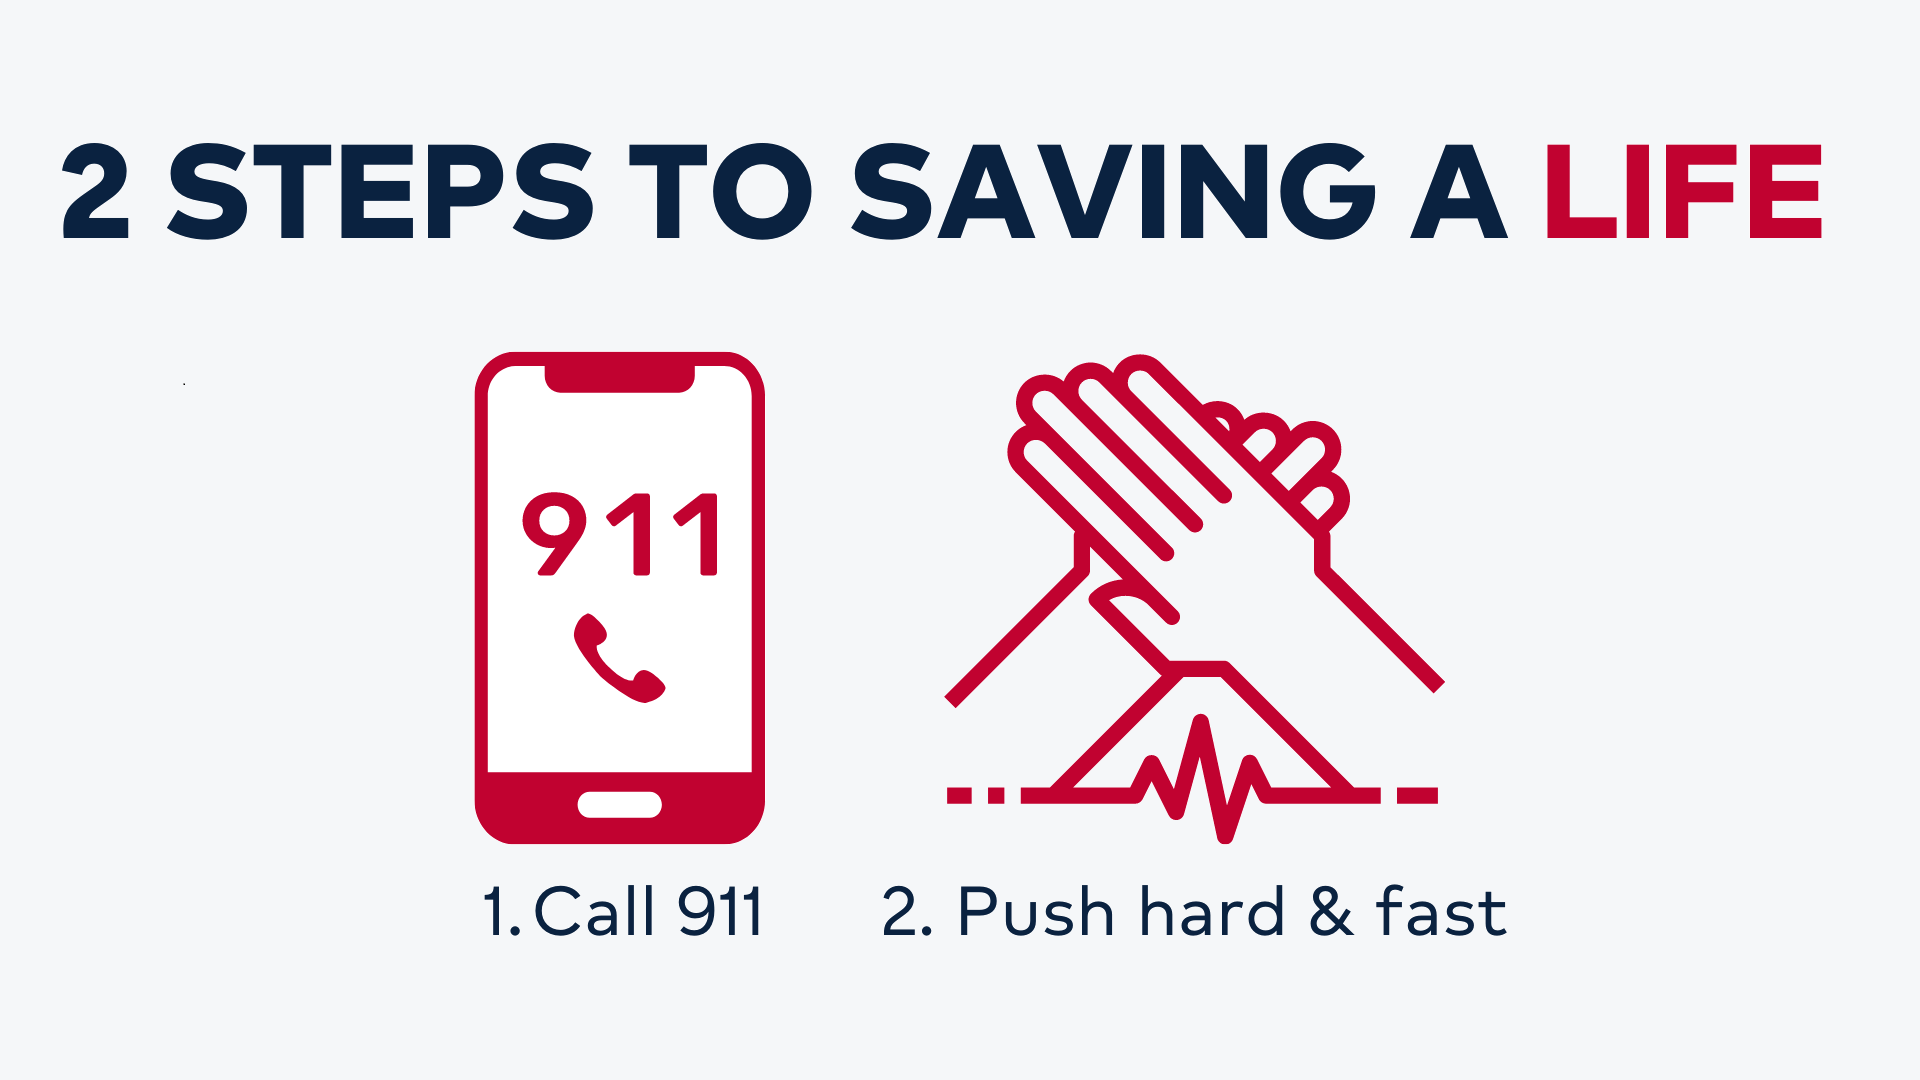 2 steps to saving a life. 1. call 911. 2. Push hard and fast.